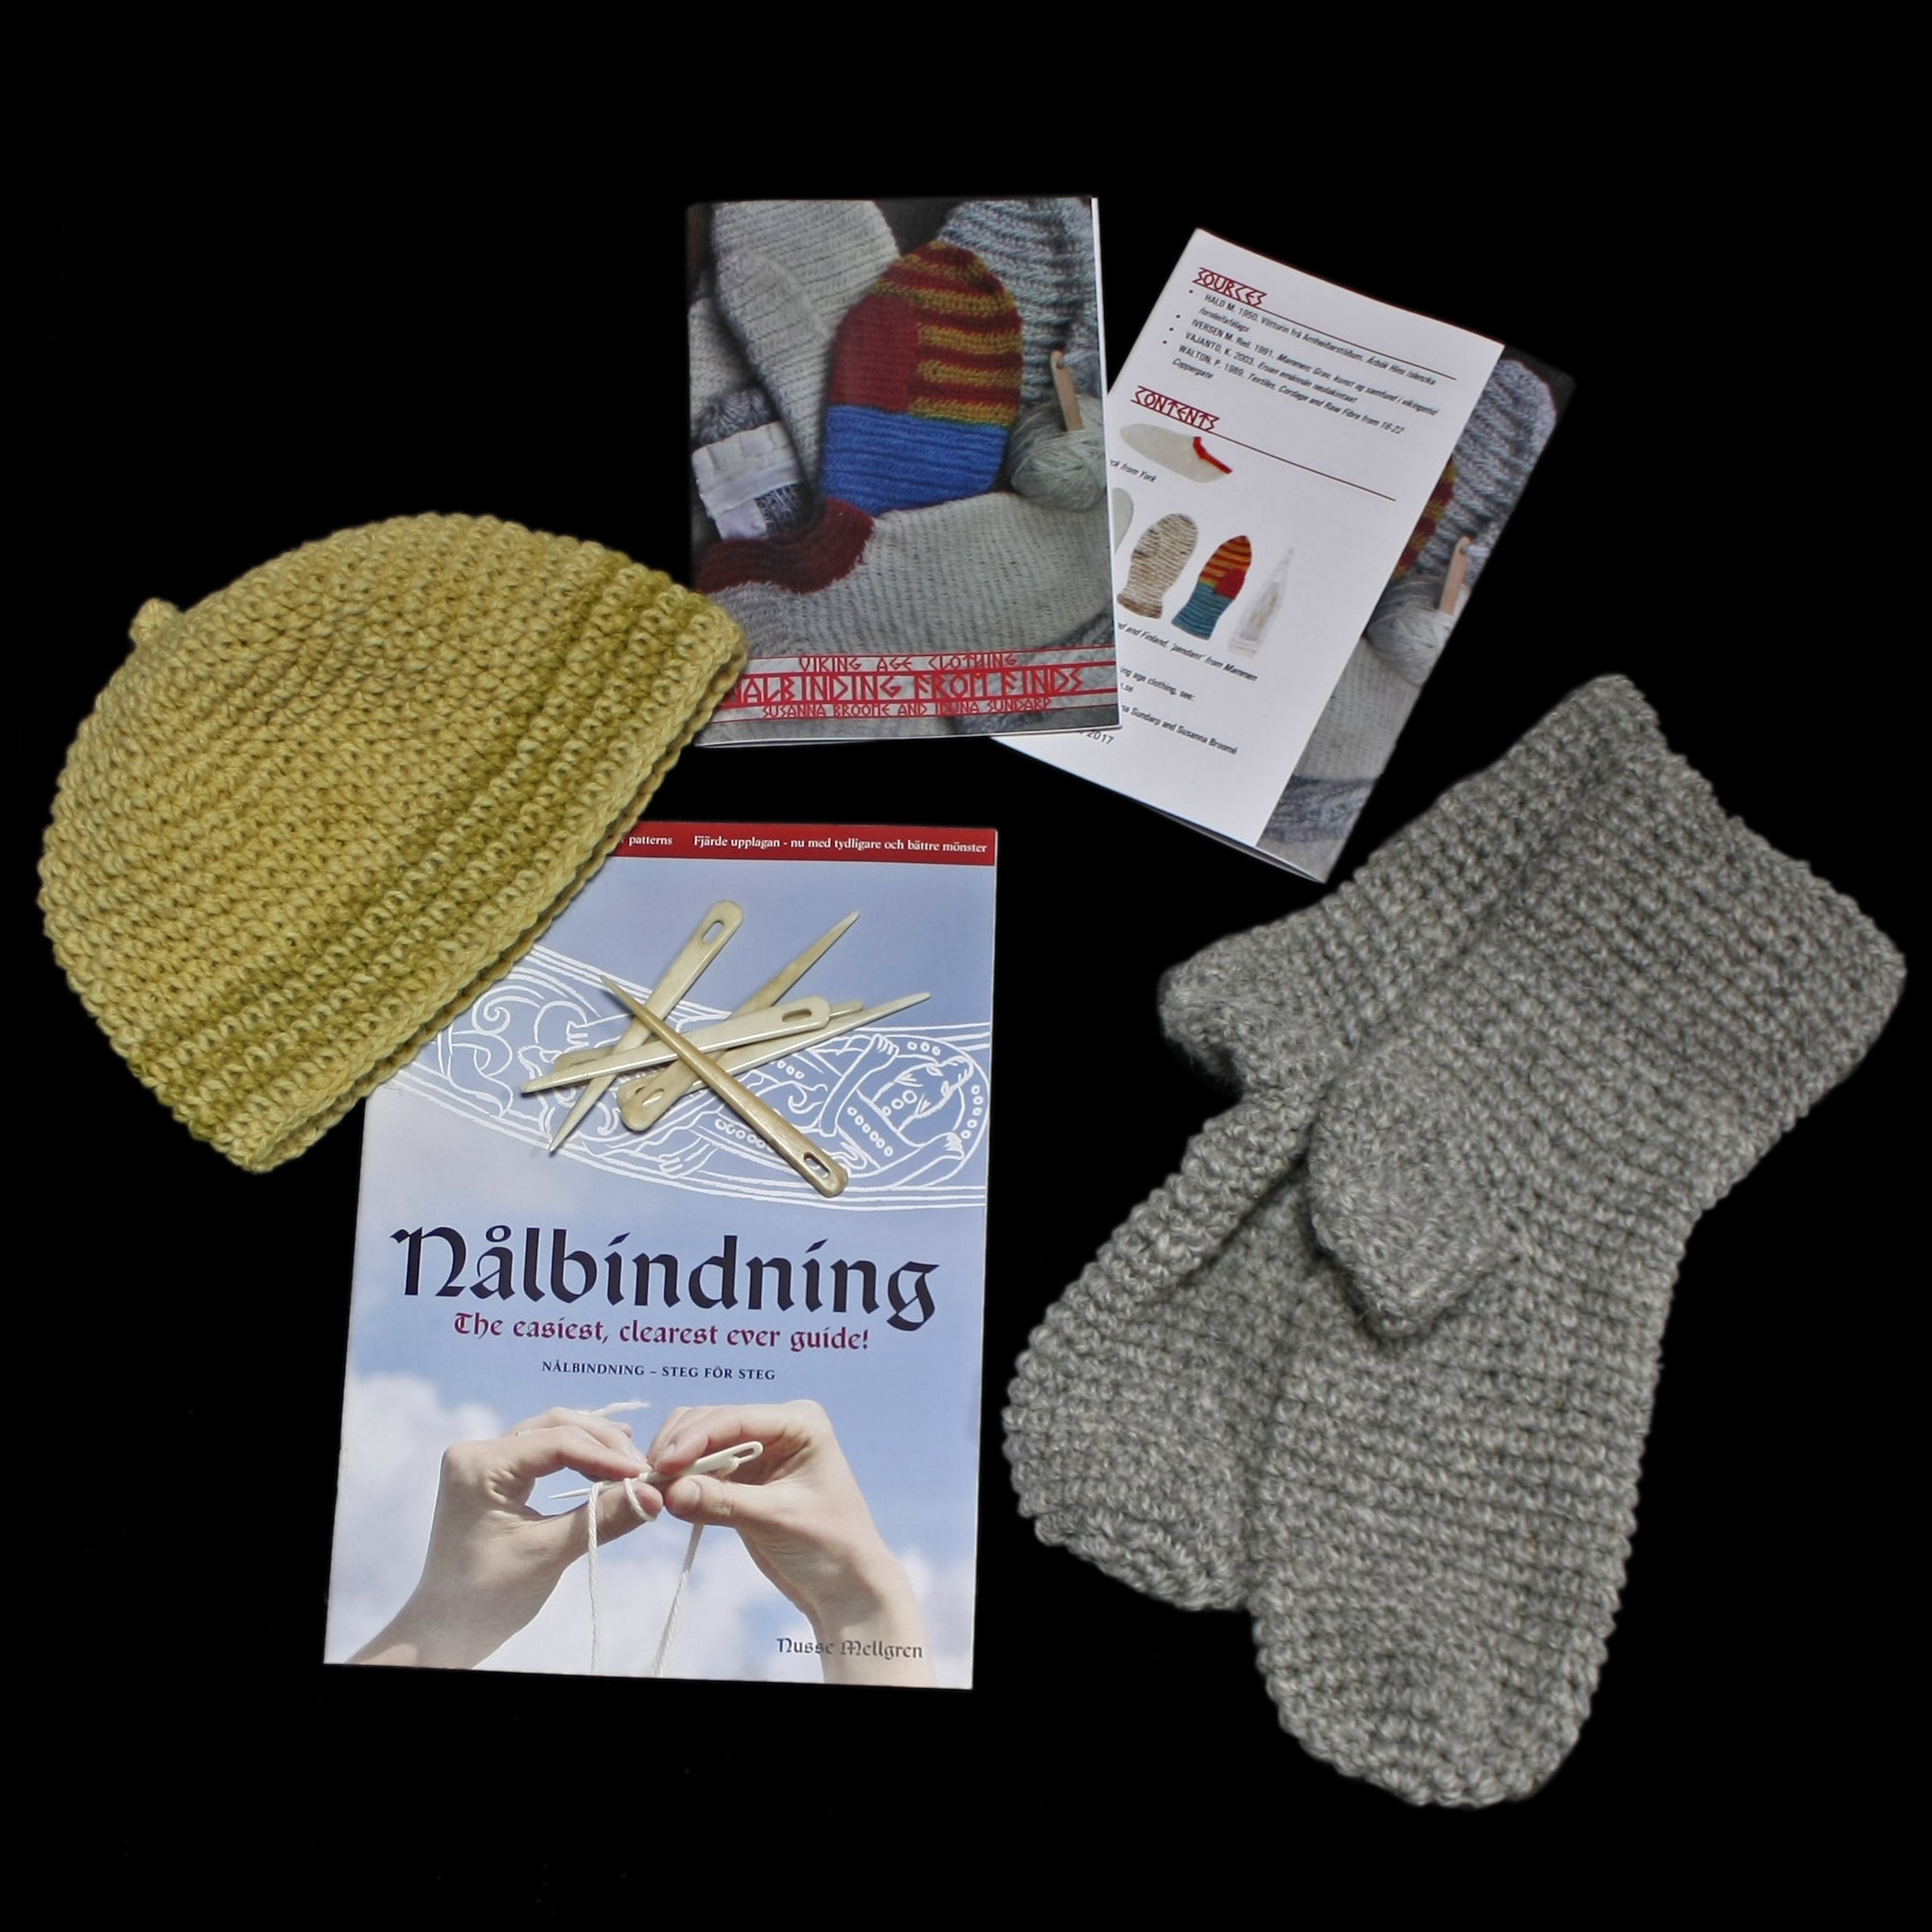 Nalbinding Supplies - Books, Wool, Needles, Hats & Socks - Viking Crafts